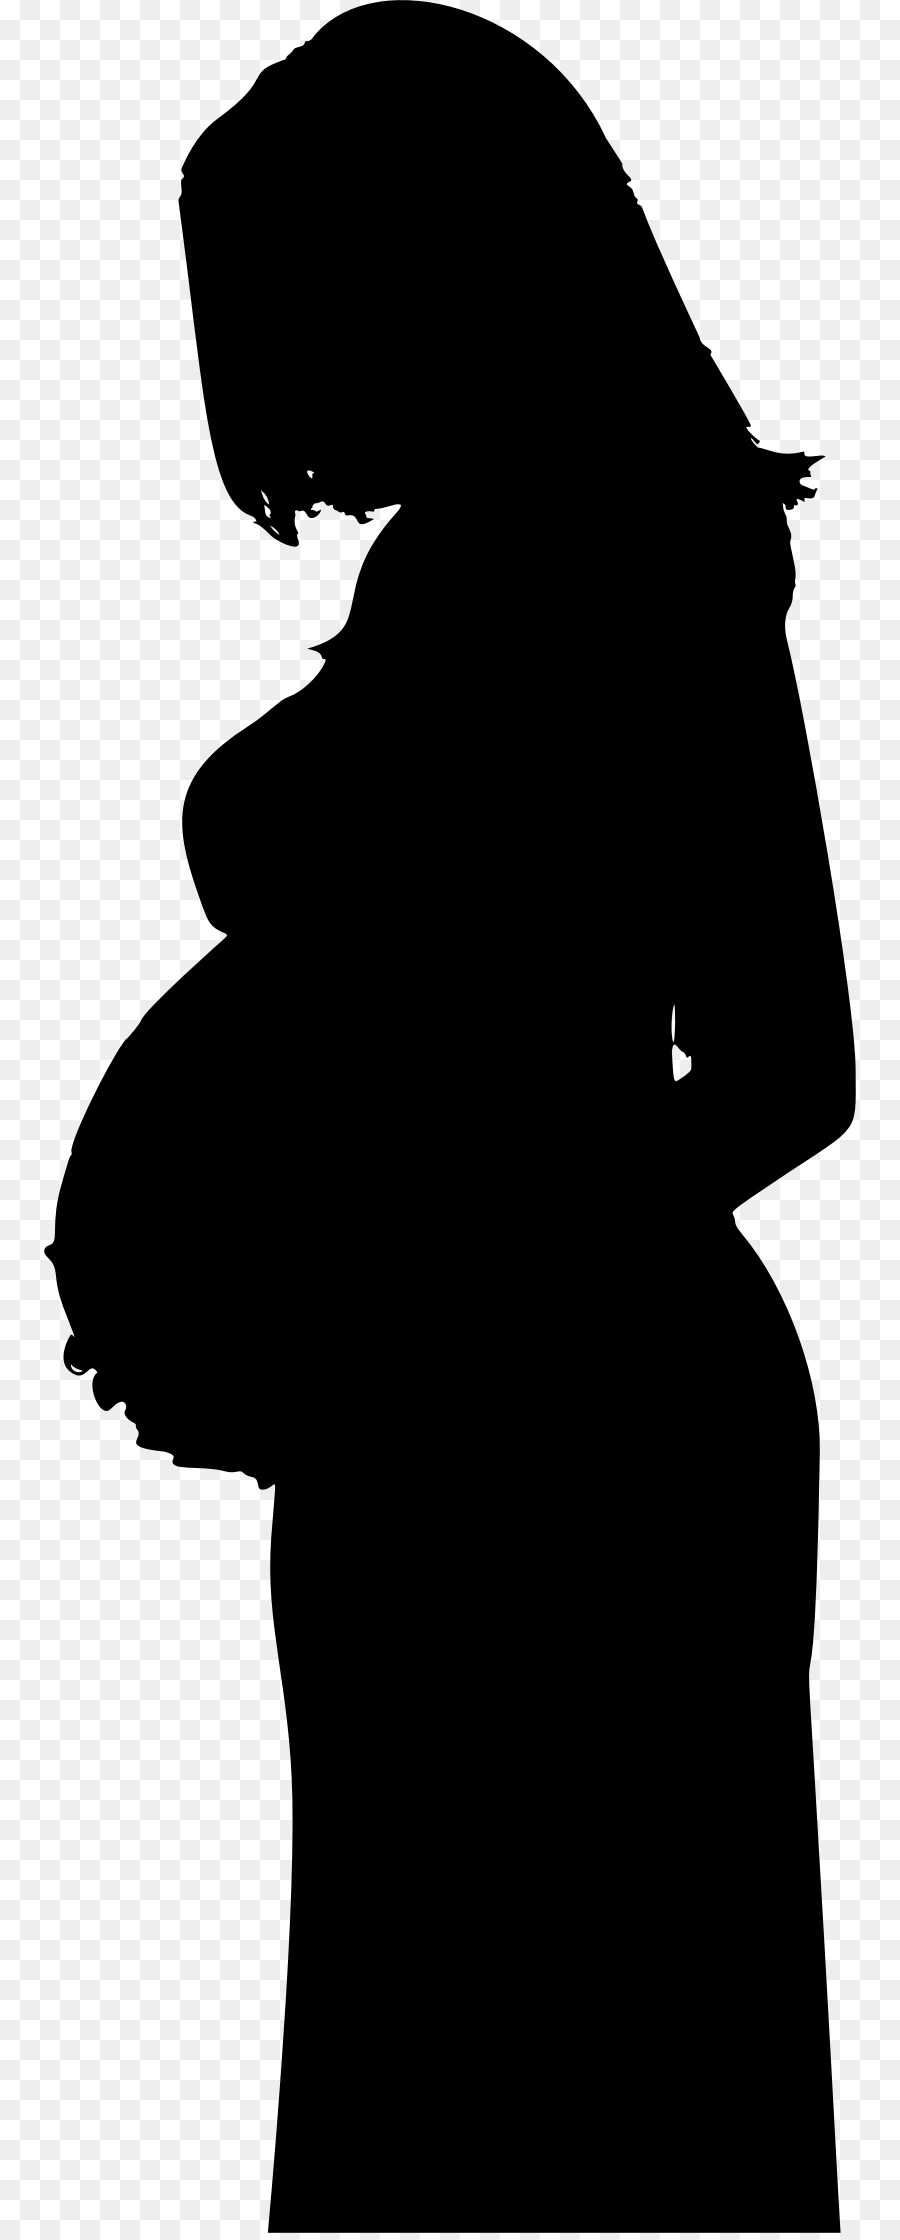 Pregnancy Mother Silhouette Woman - pregnancy png download - 812*2233 - Free Transparent Pregnancy png Download.